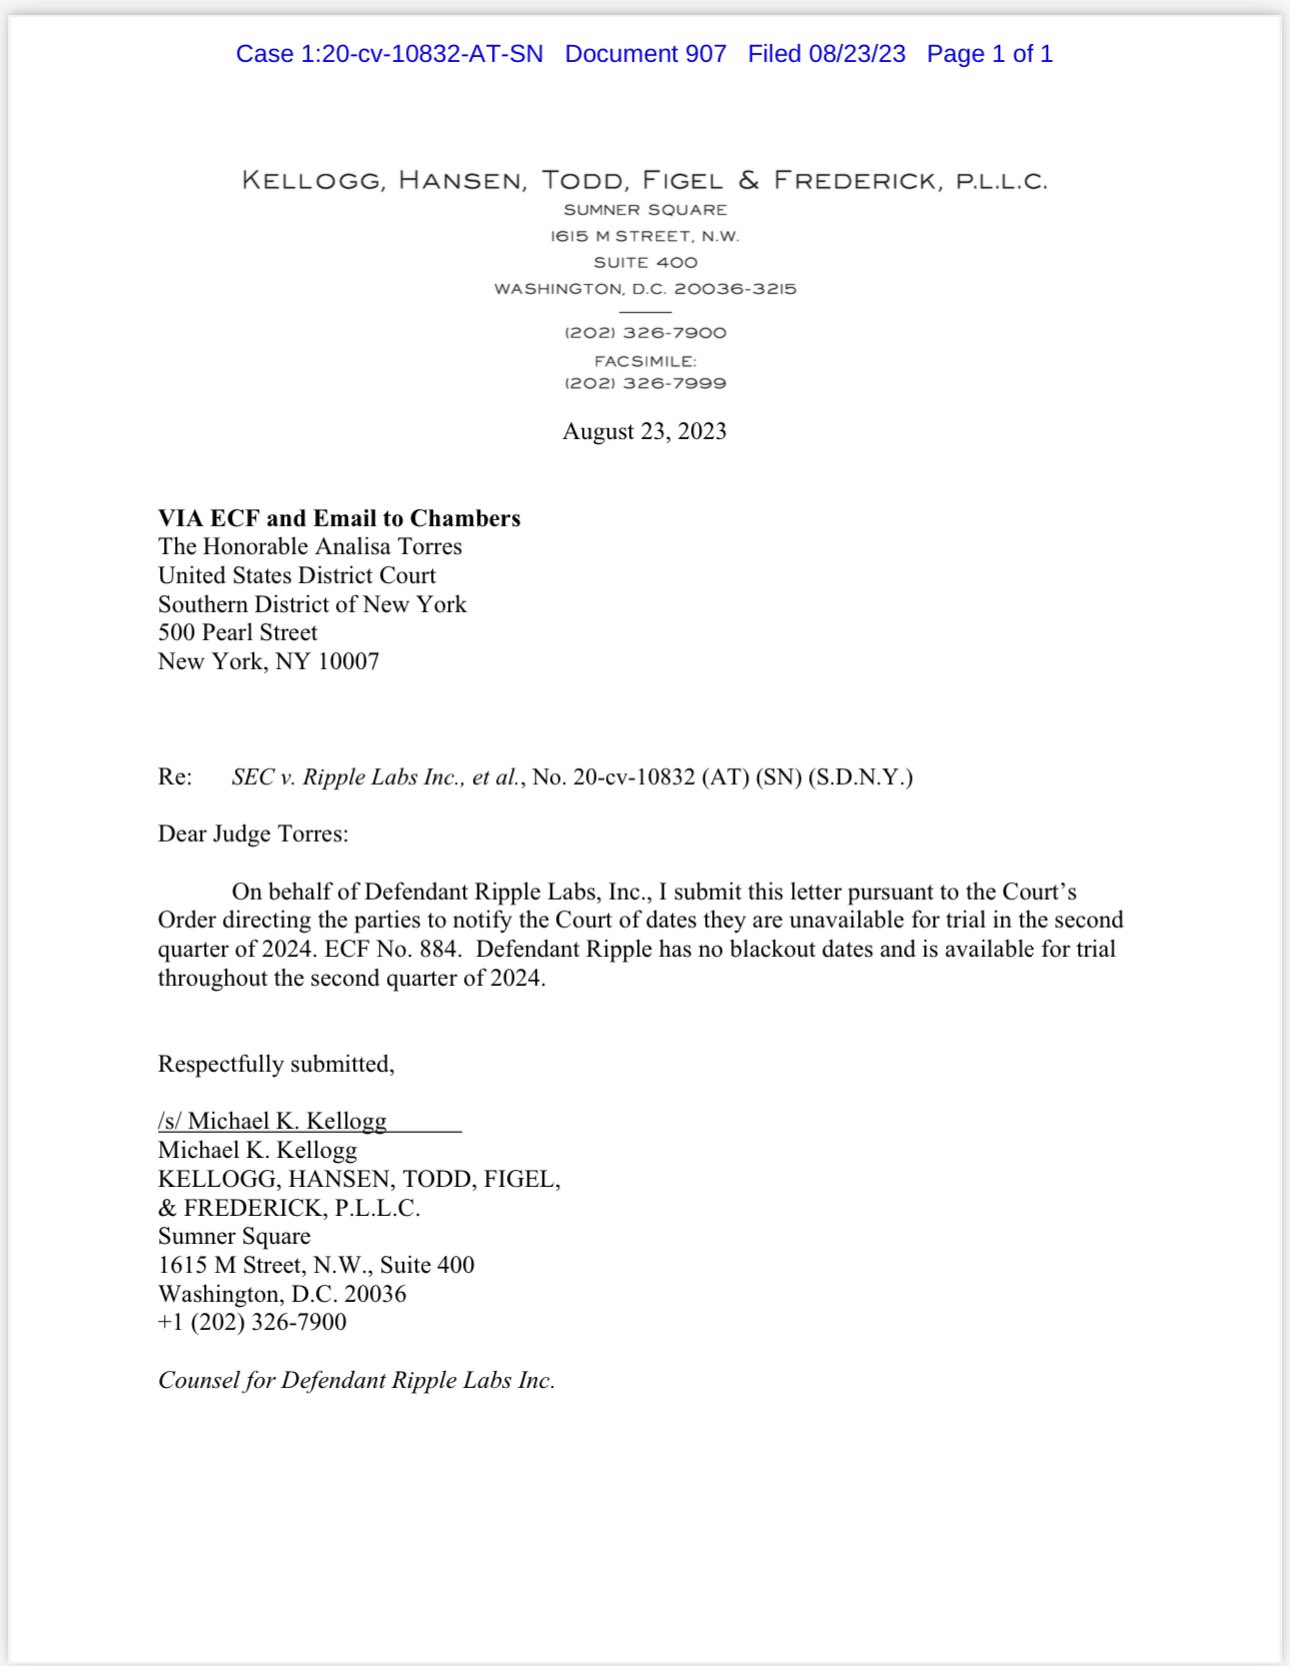 SEC vs. Ripple Labs filing on August 23